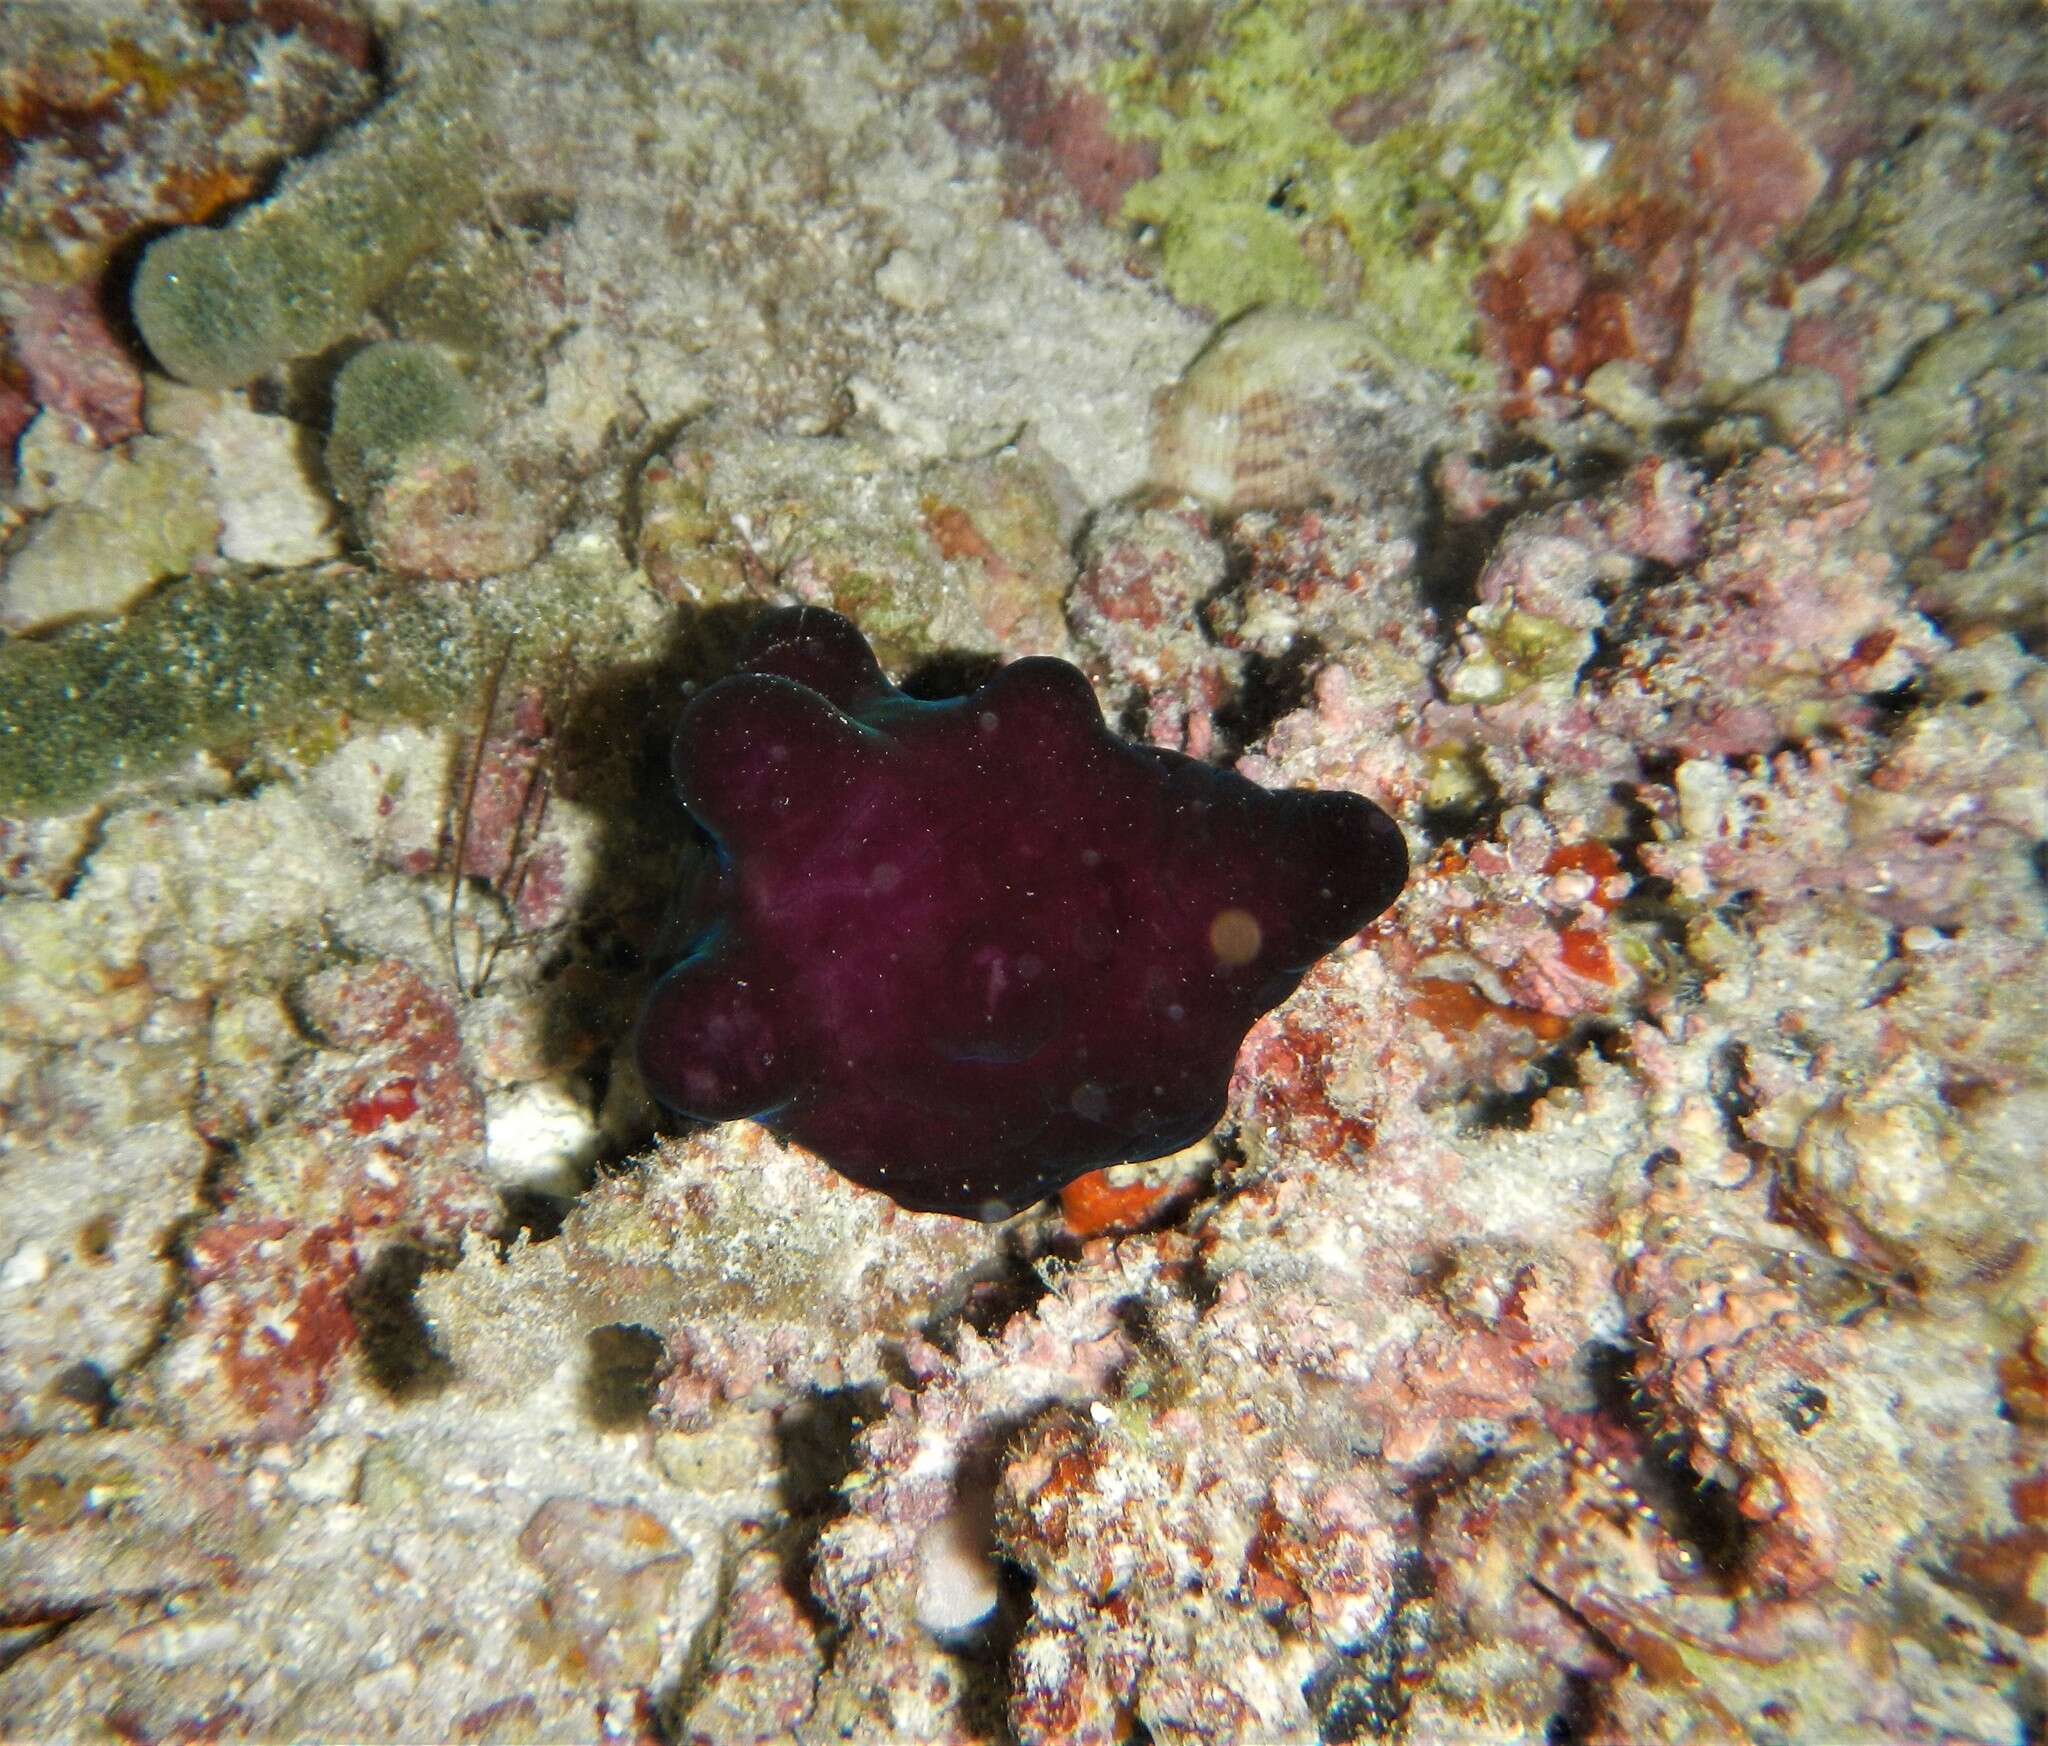 Image of Maldives sponge snail